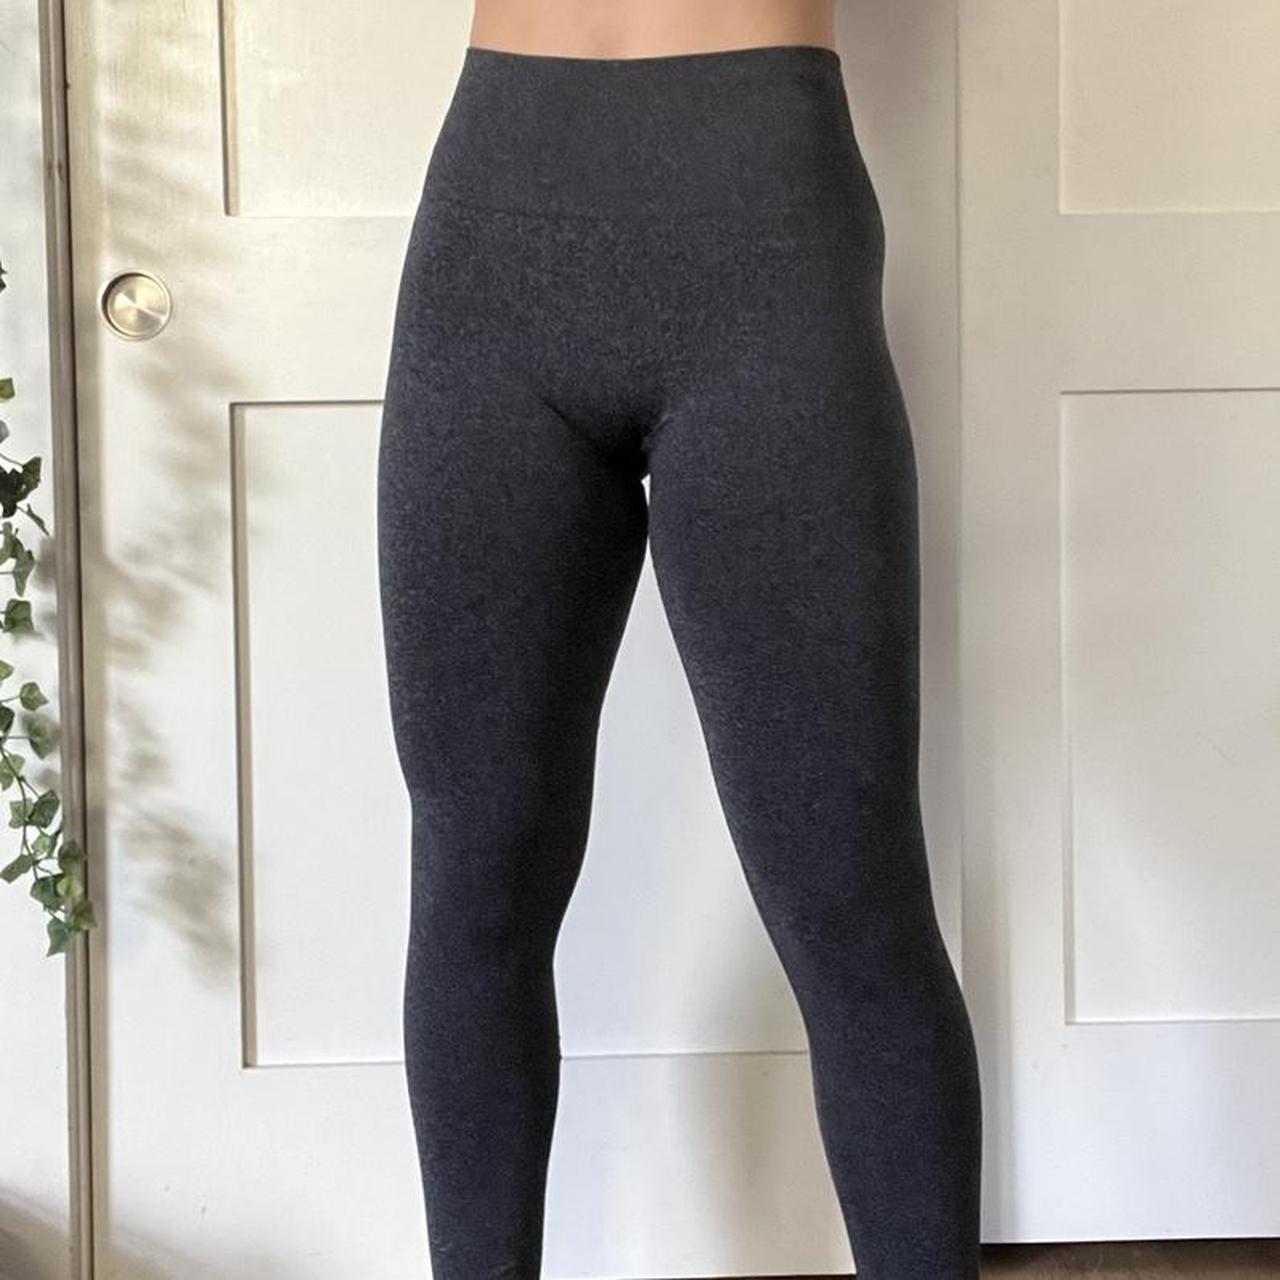 Seamless charcoal grey leggings squat proof size - Depop